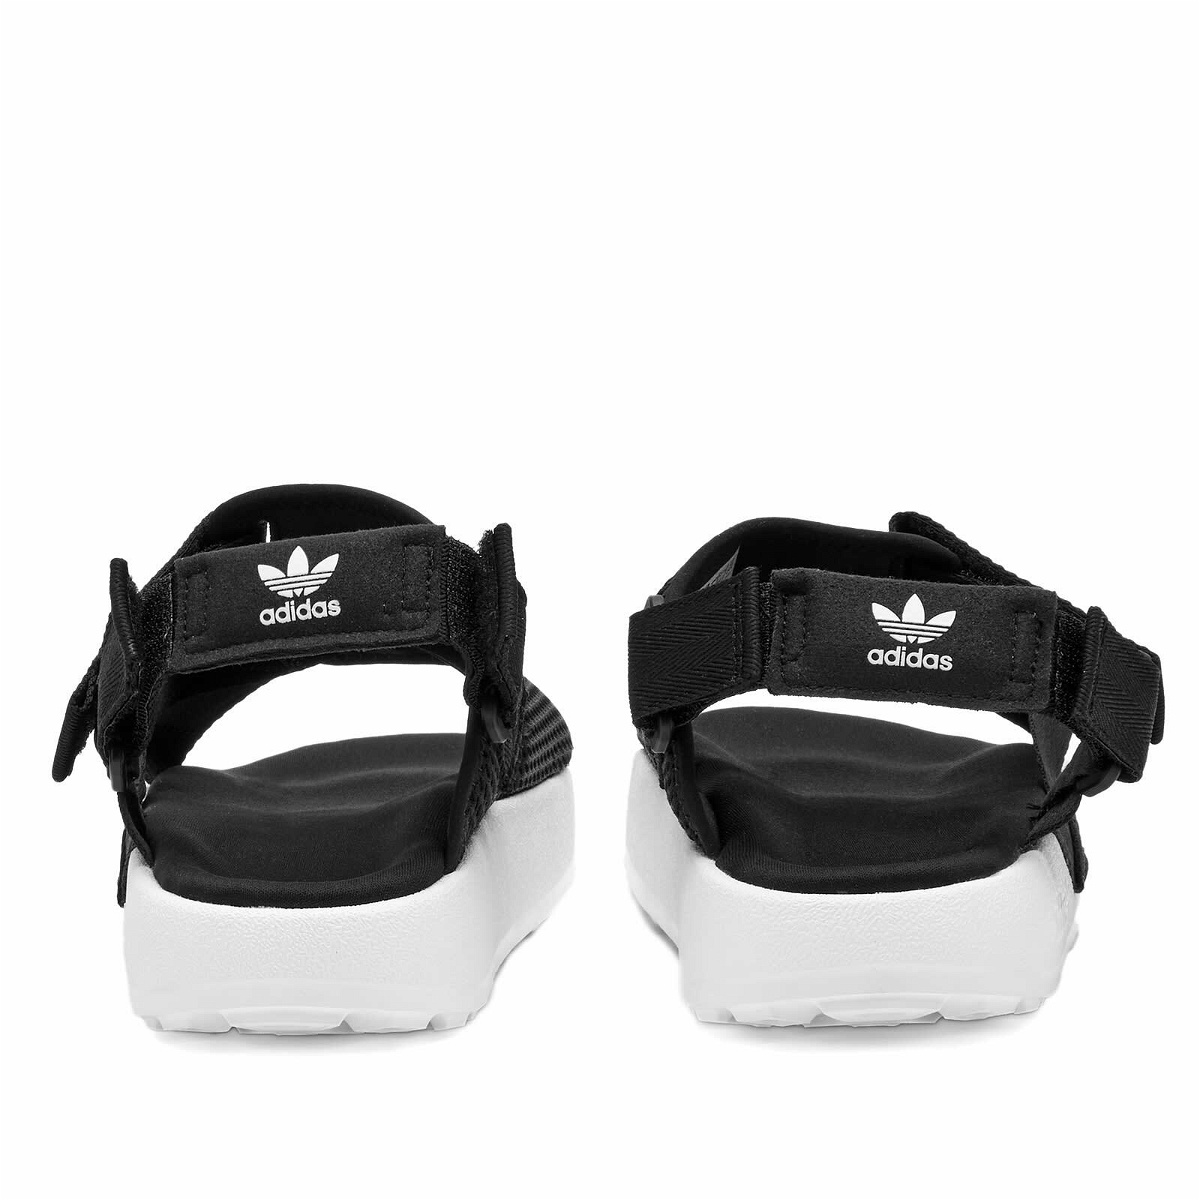 Core W adidas Adidas in Black/White ADV Women\'s Adilette